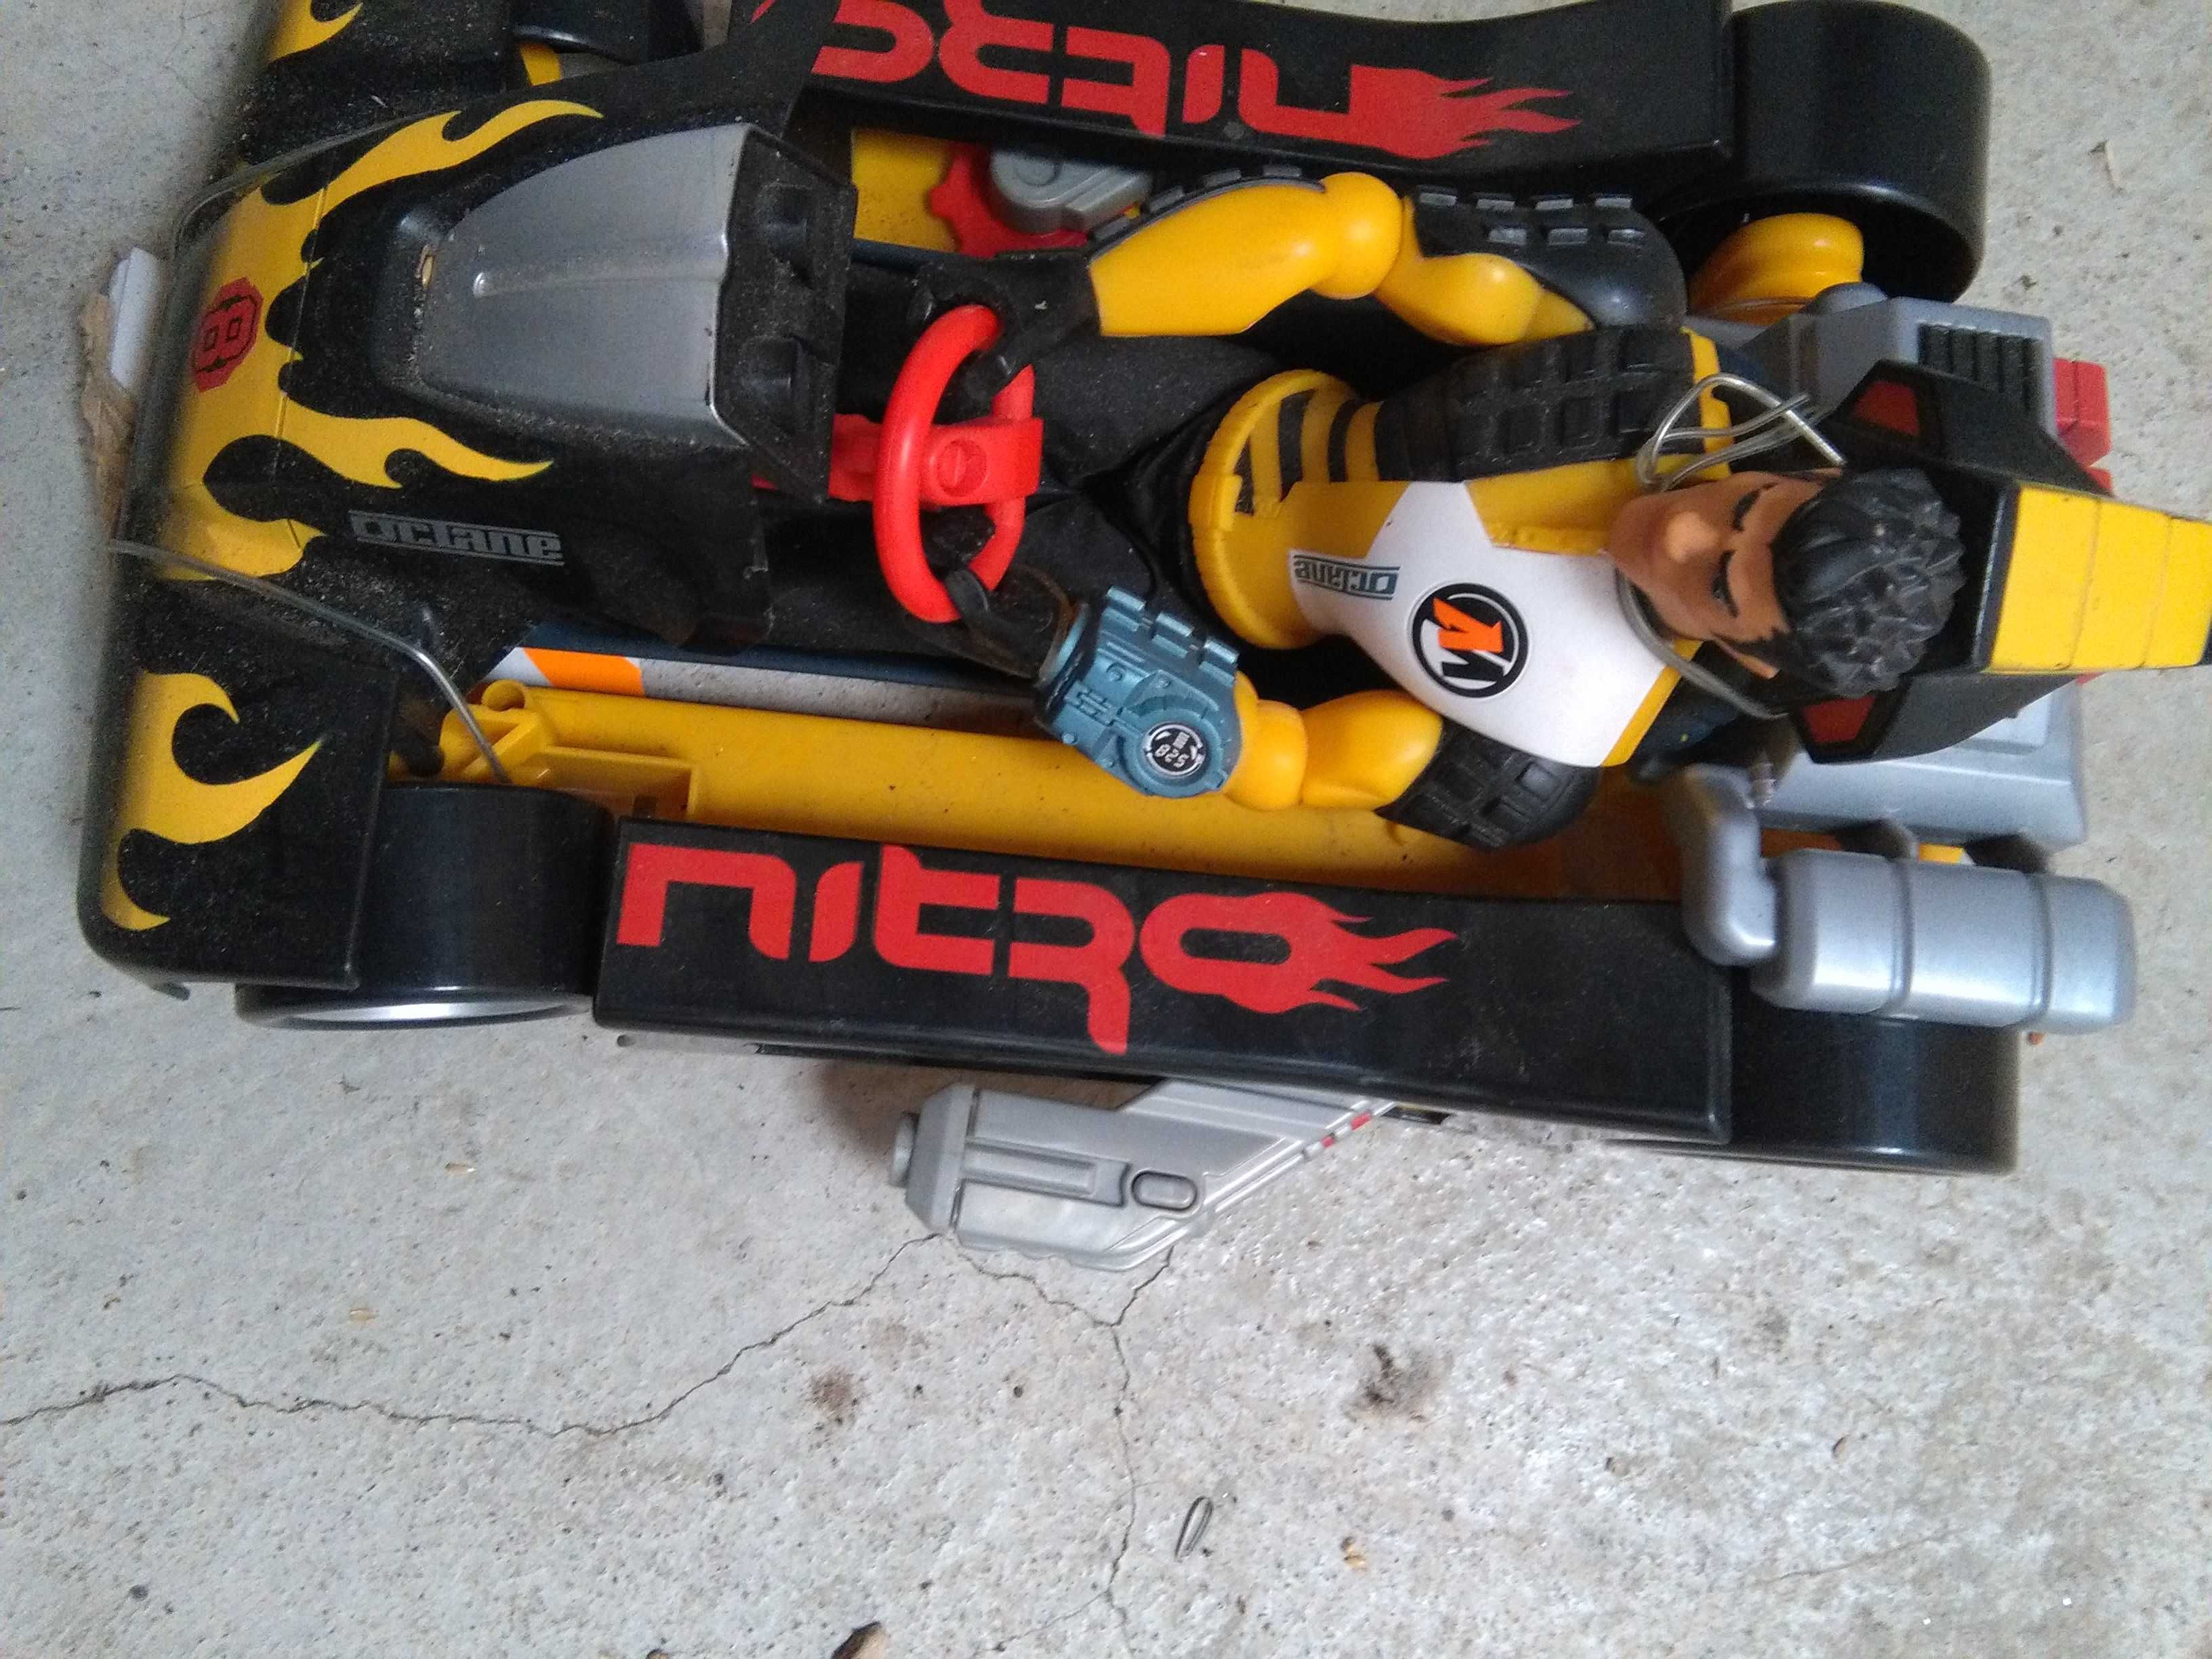 Boneco Action Man com carro de corrida -Novo